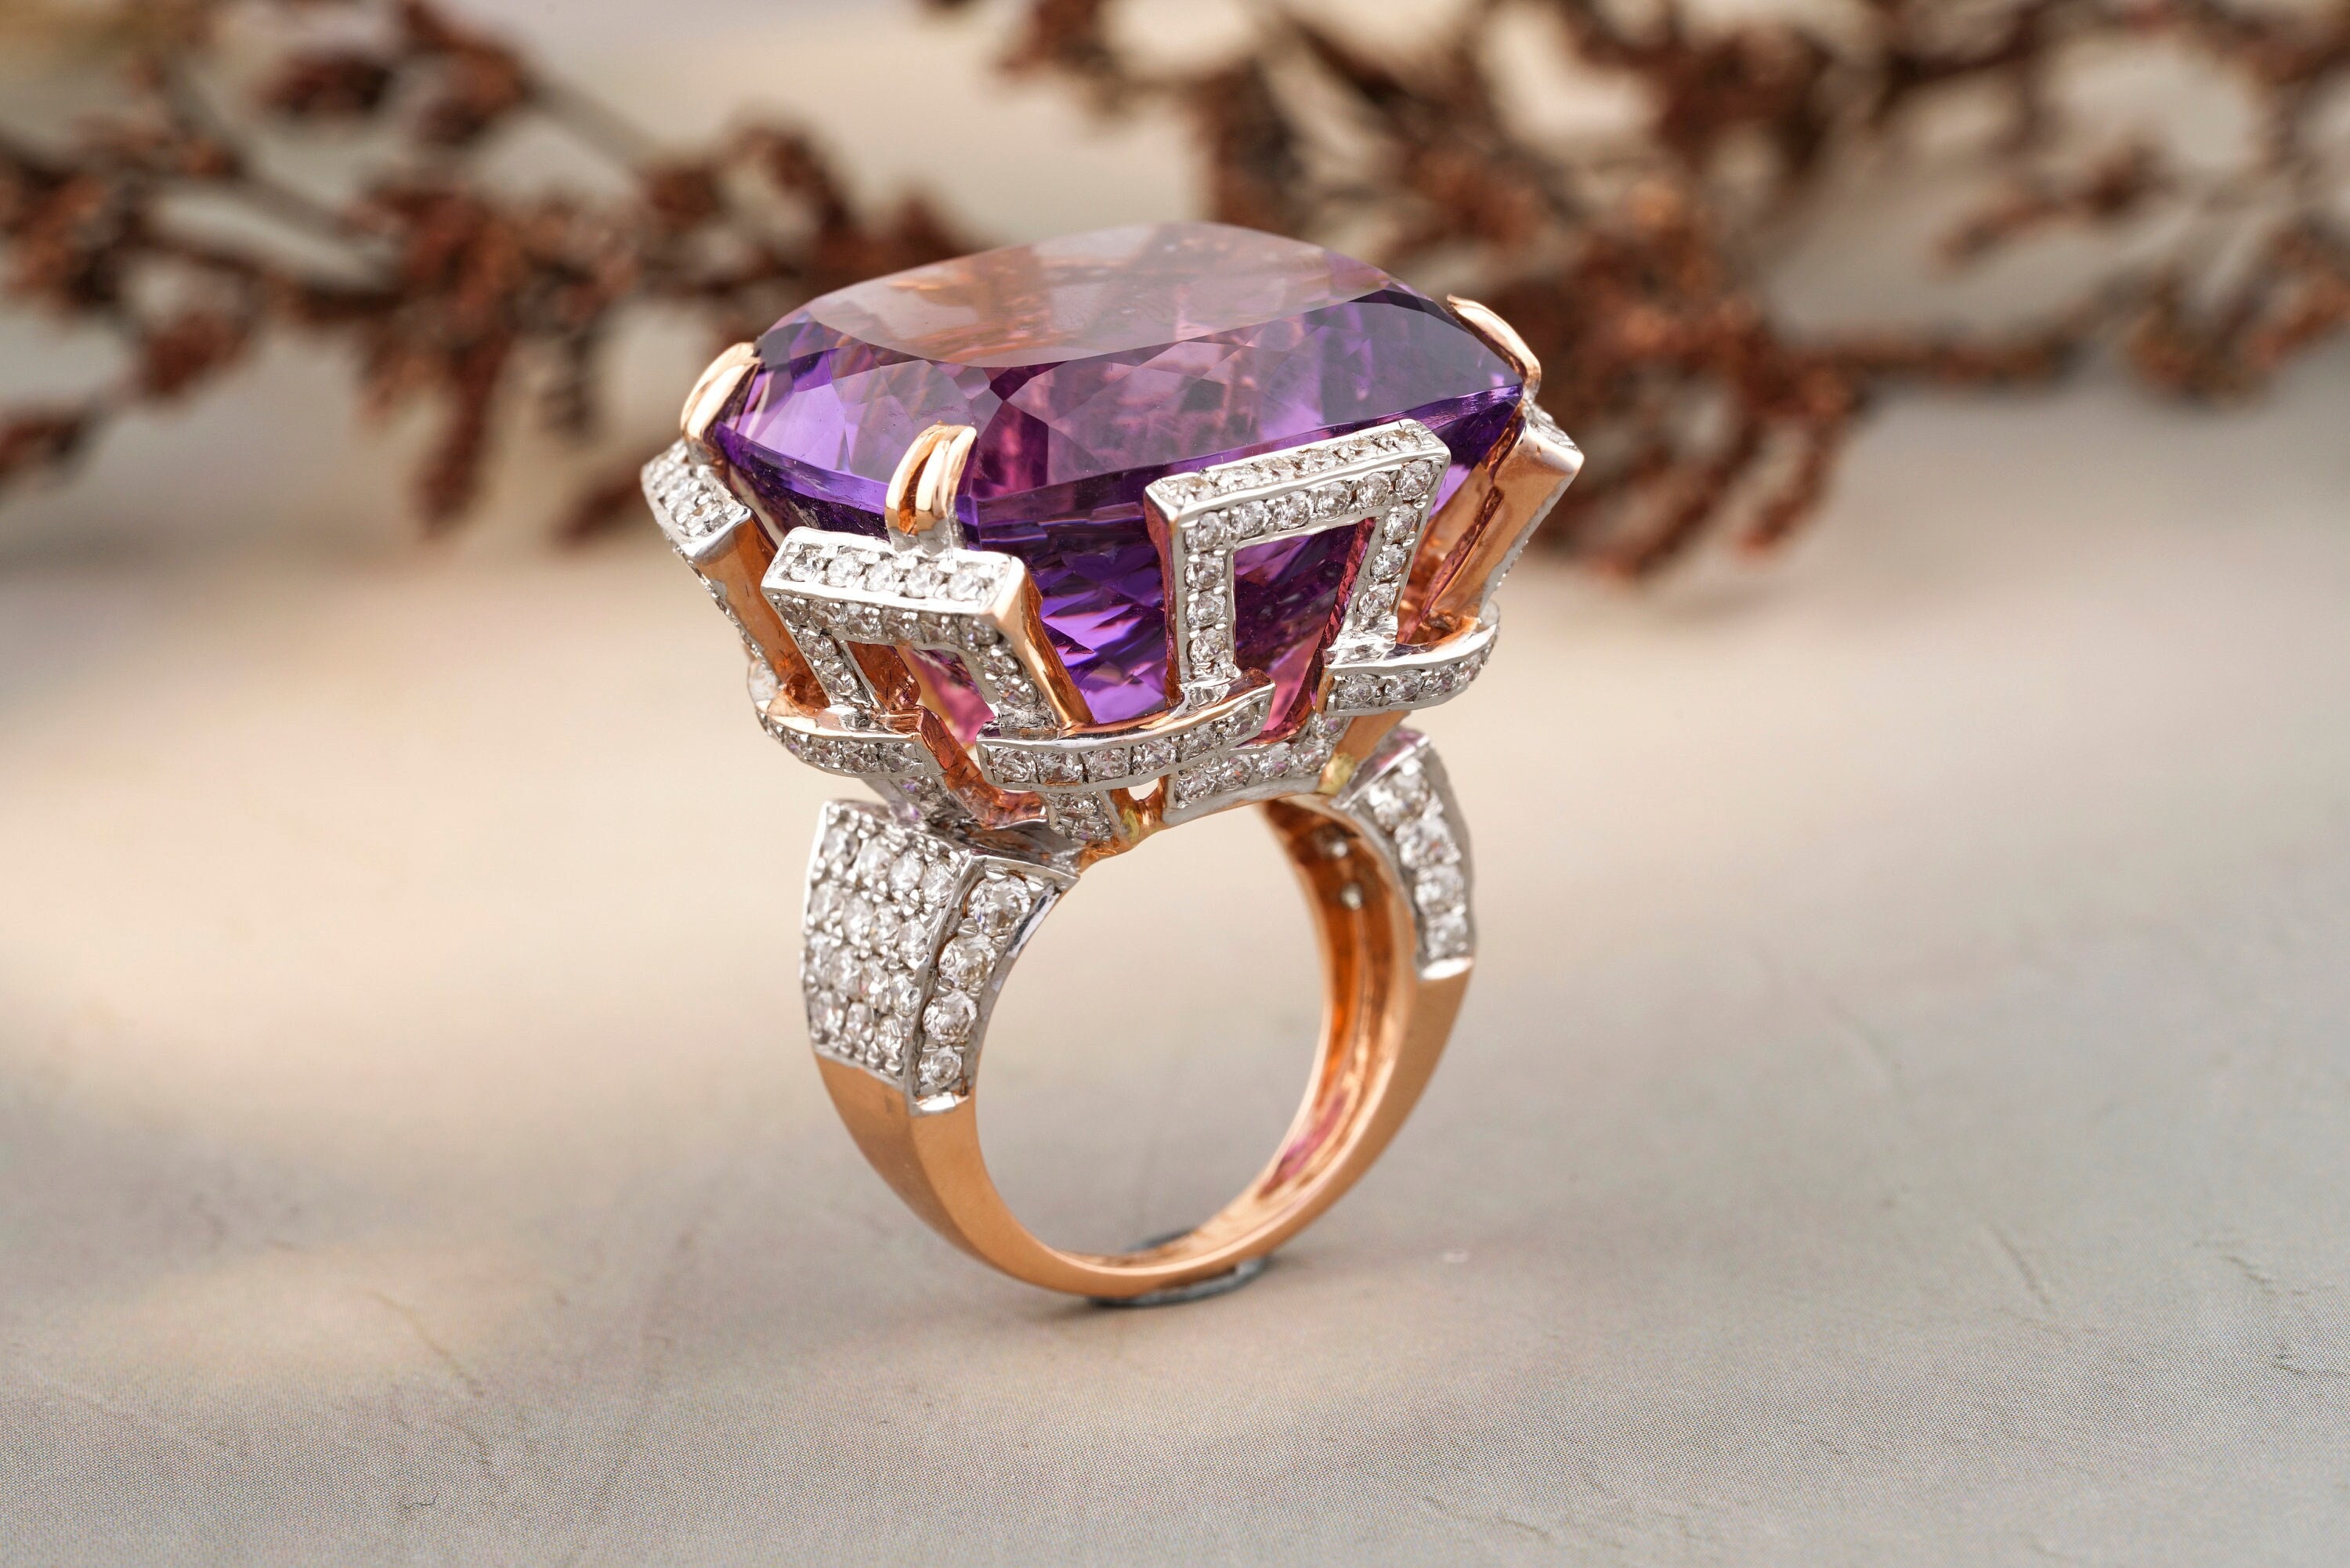 The Perfect Valentine's Day Gift & Birthday Present: Amethyst Jewelry |  Valina Fashion Blog